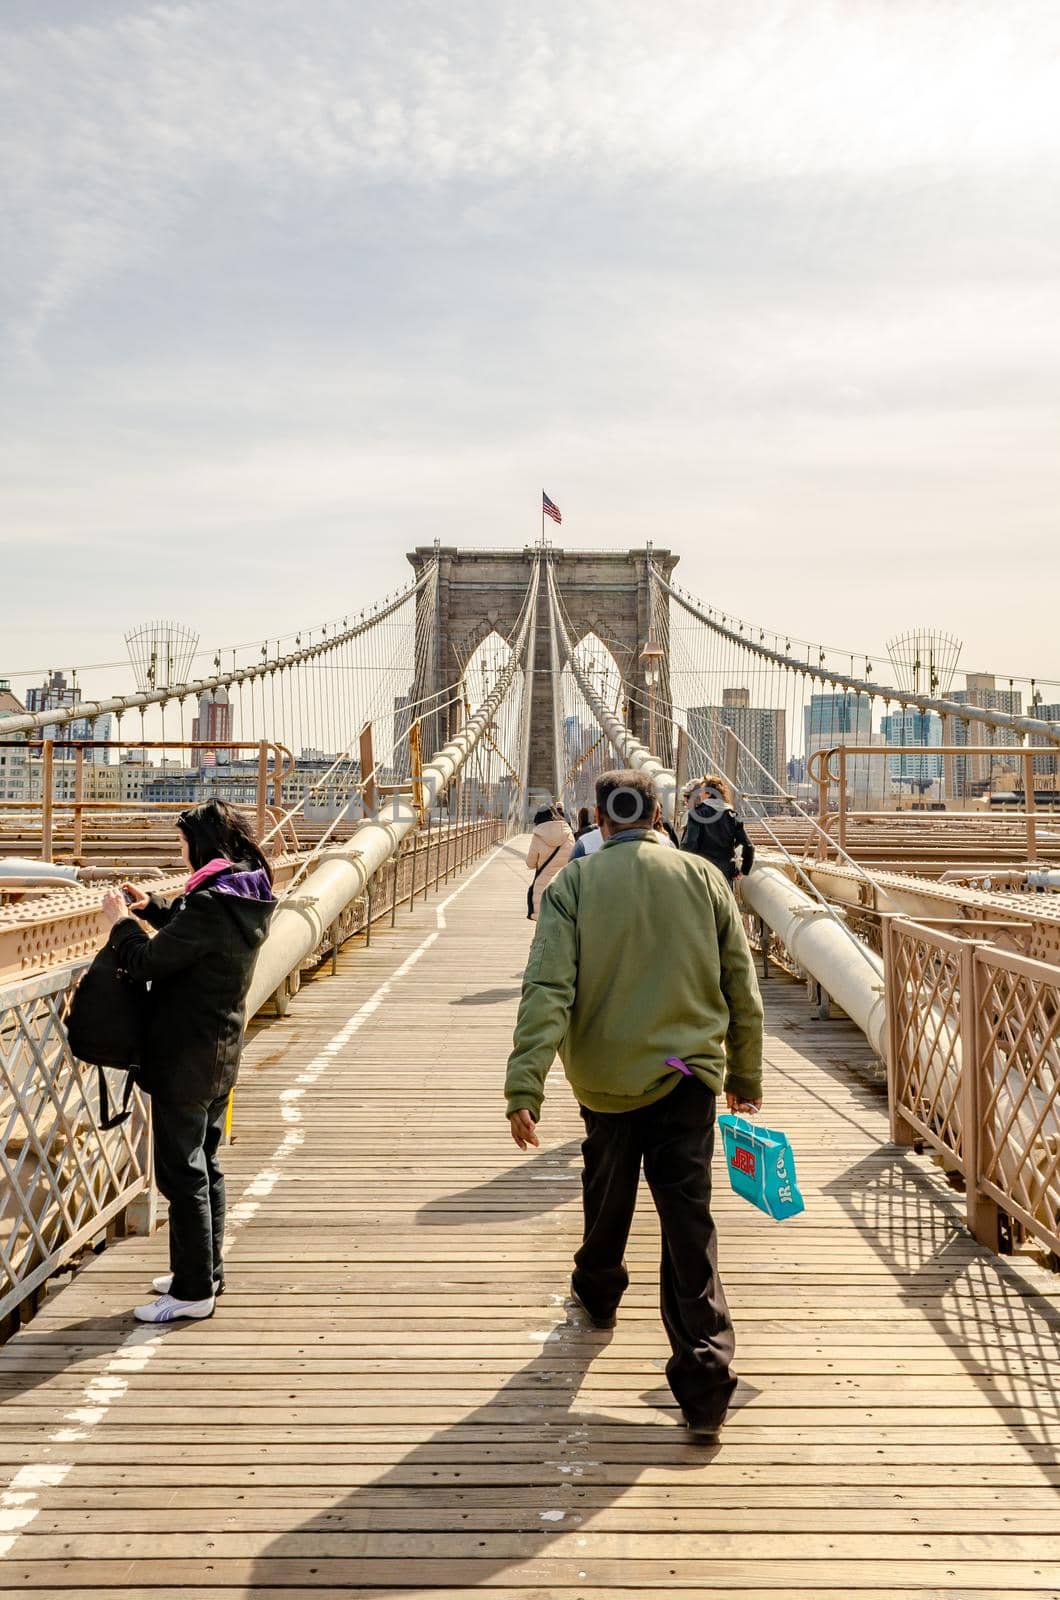 Brooklyn Bridge New York City with People walking on the Bridge by bildgigant